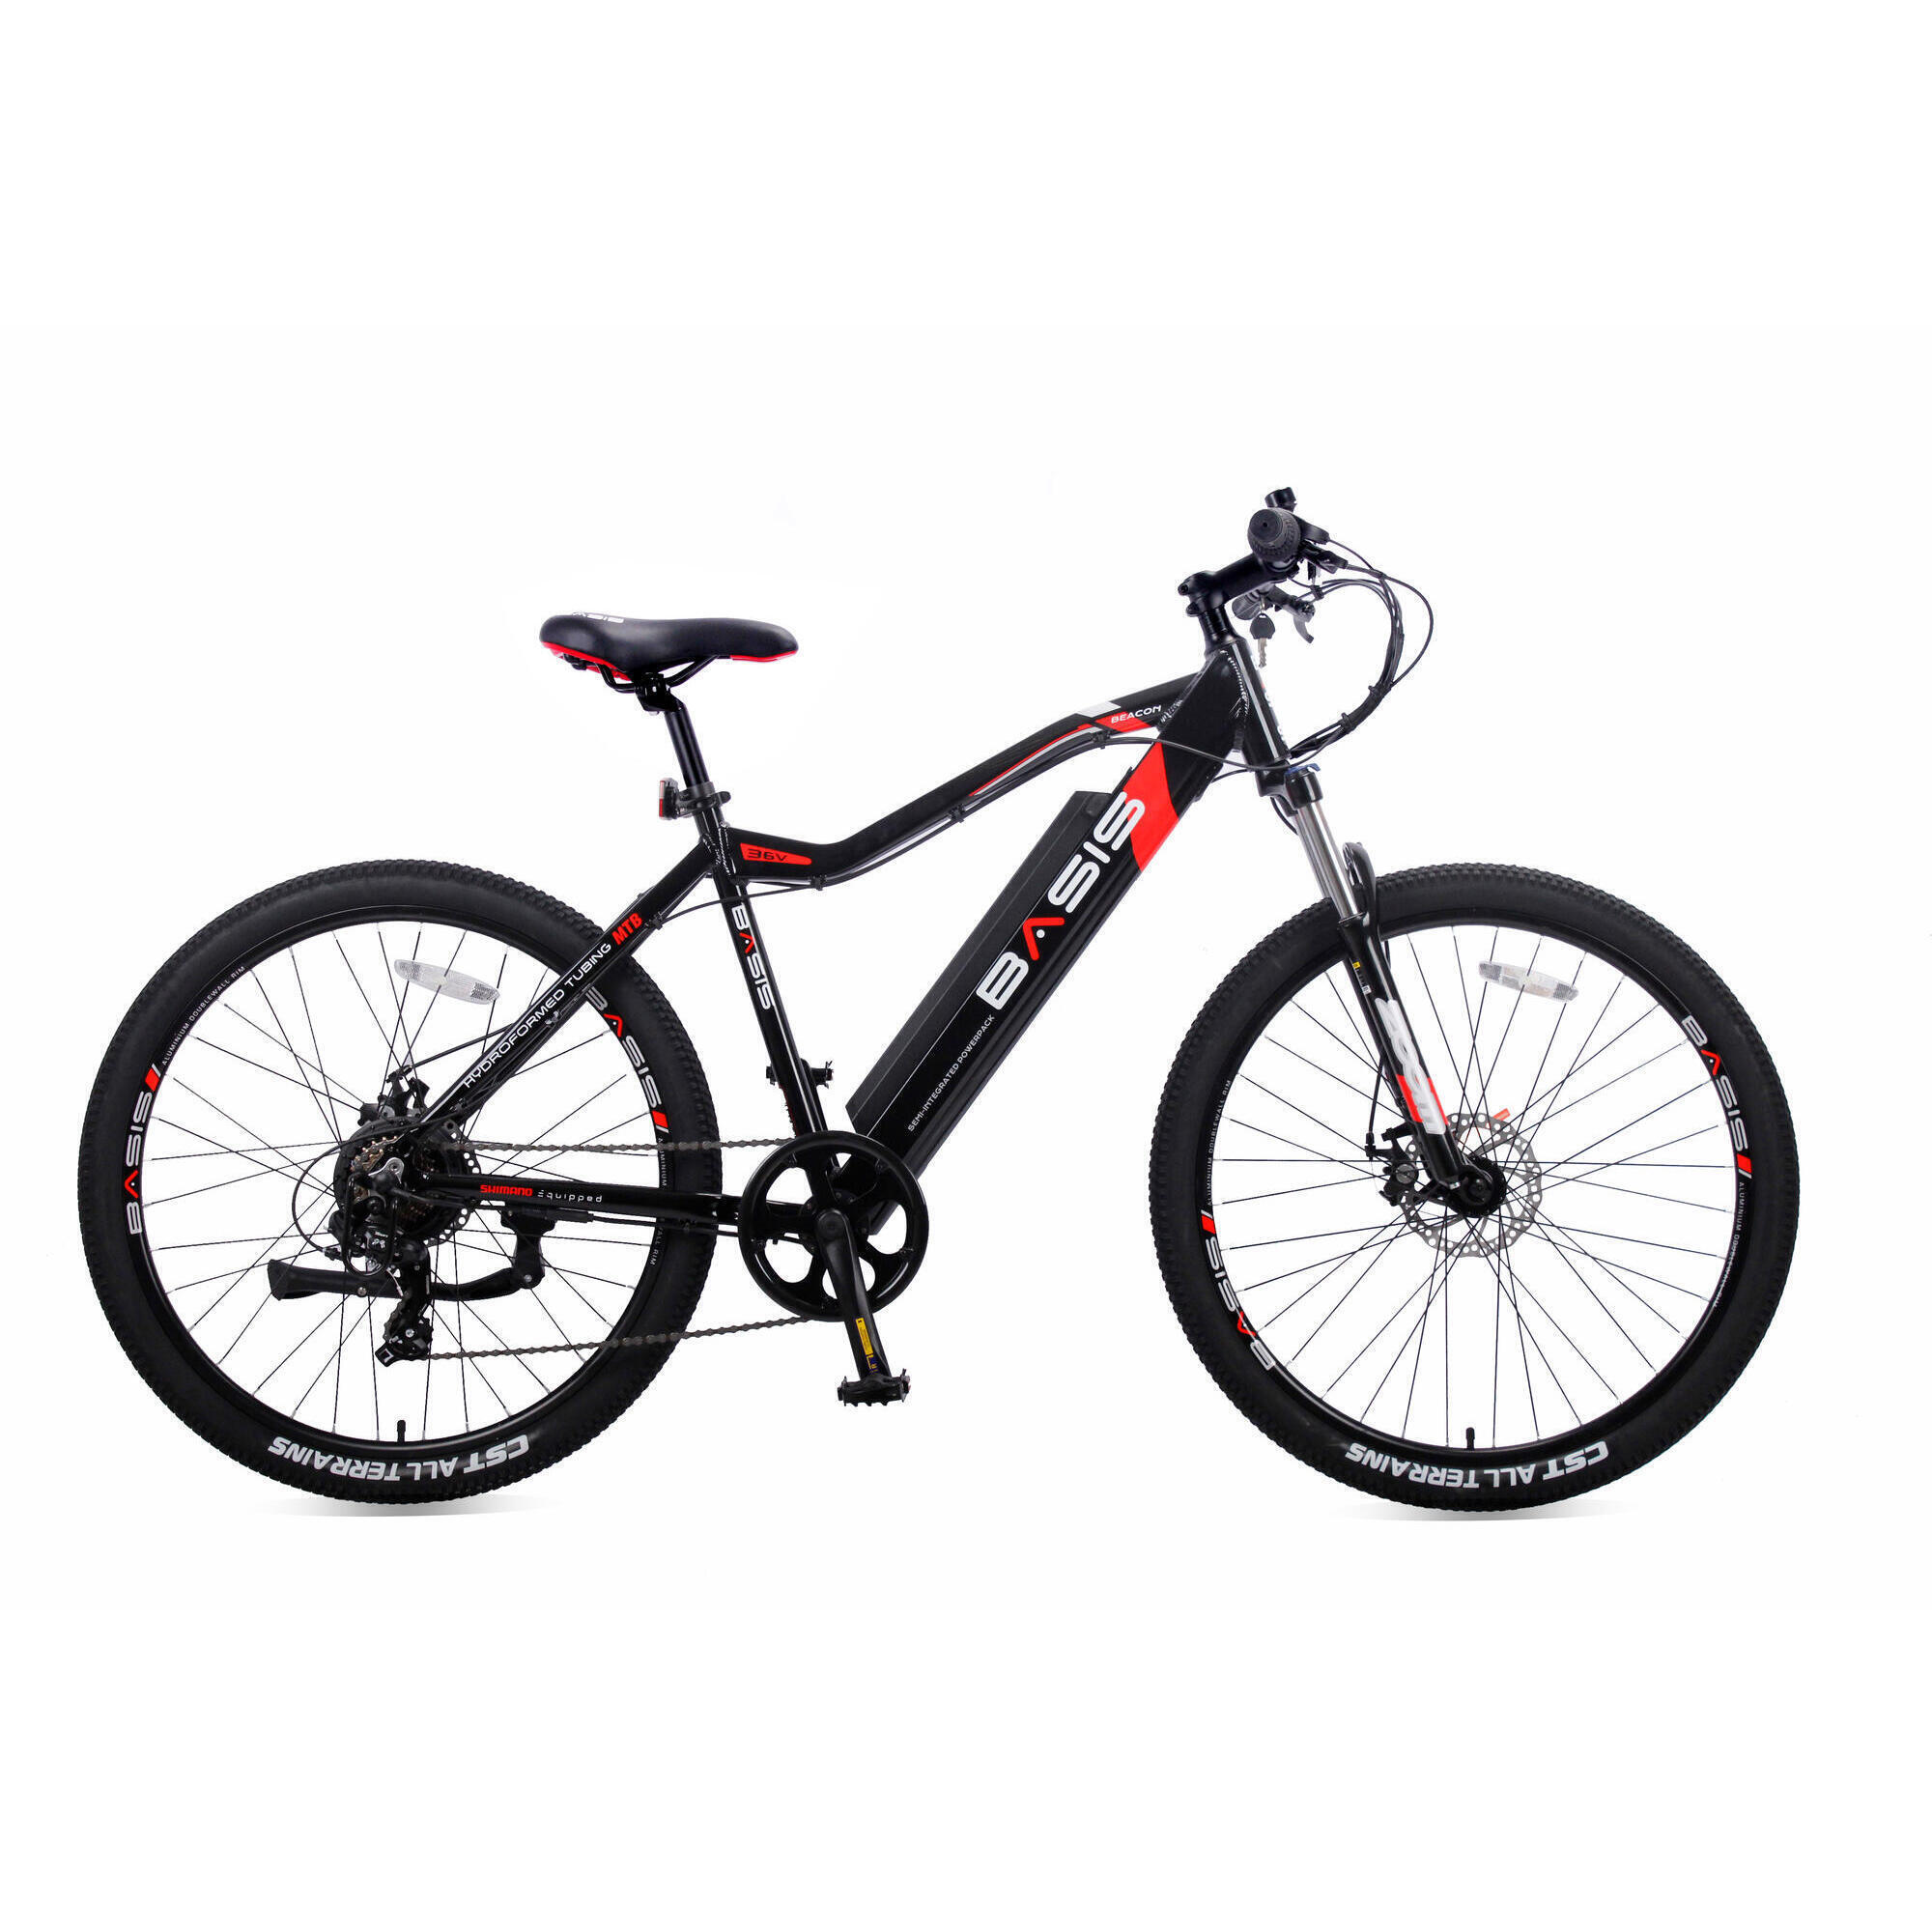 Basis Beacon Hardtail Electric Mountain bike, 14Ah - Black/Red 1/5